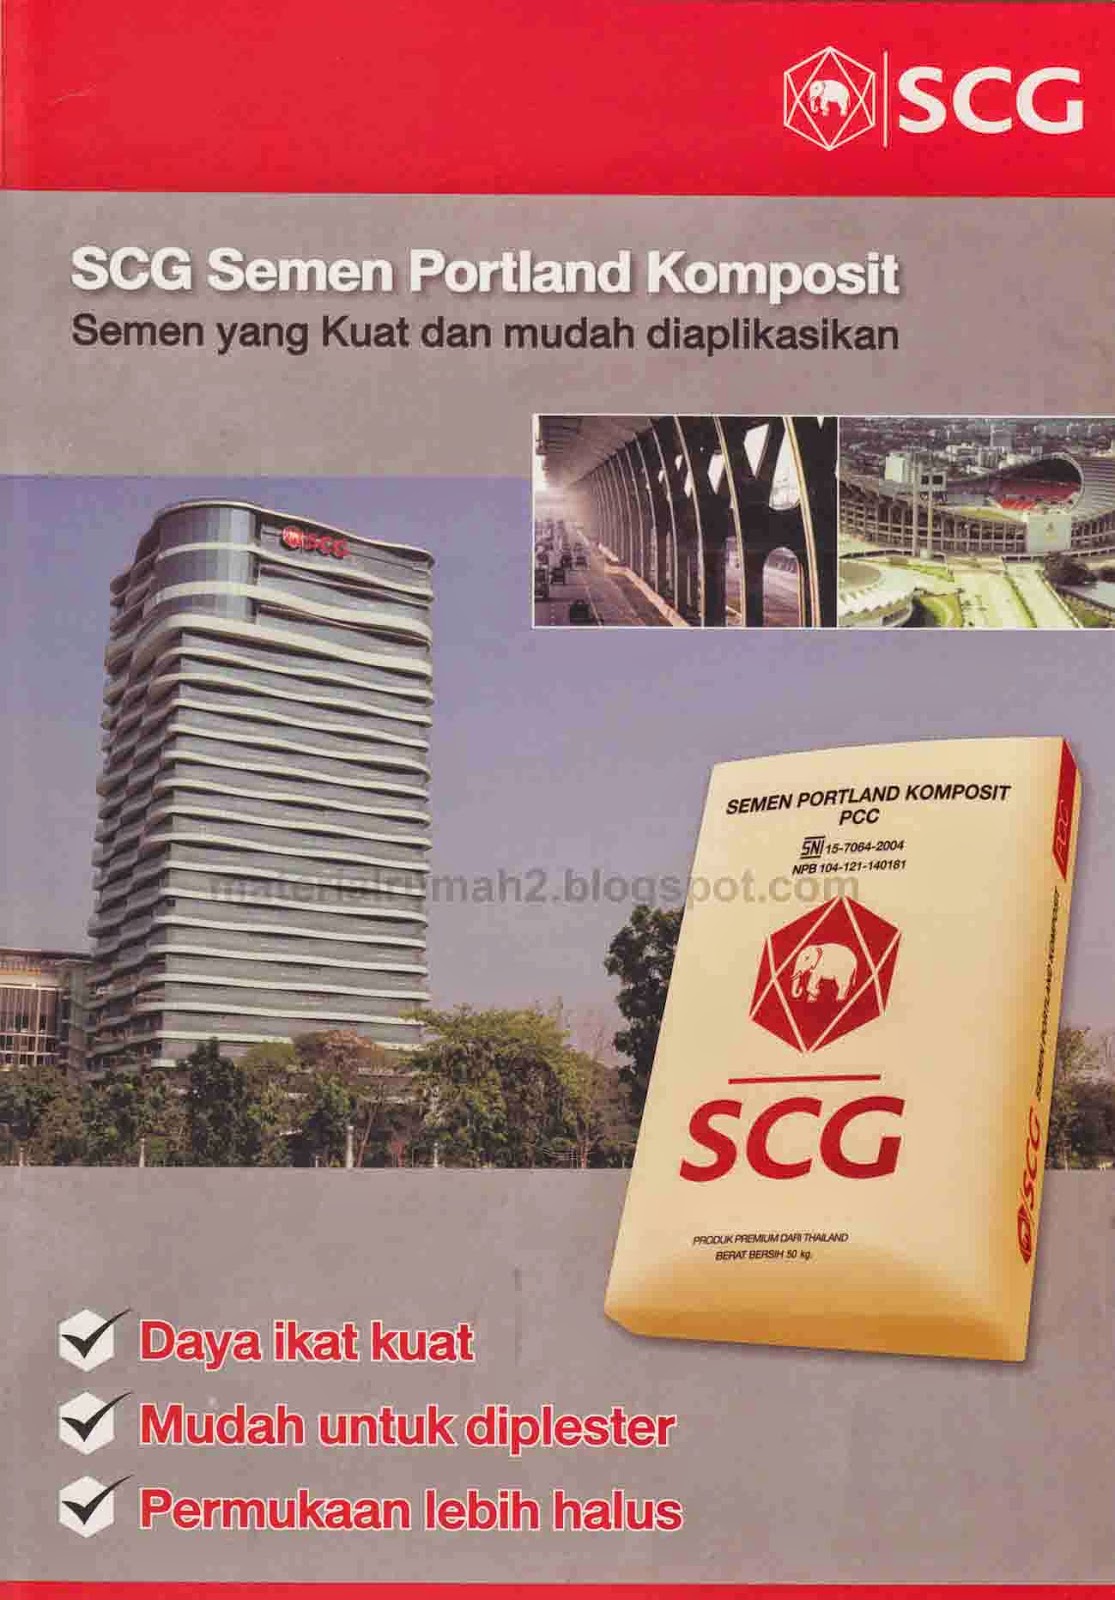 Mengenal Semen Portland Komposit SCG Rumah Material